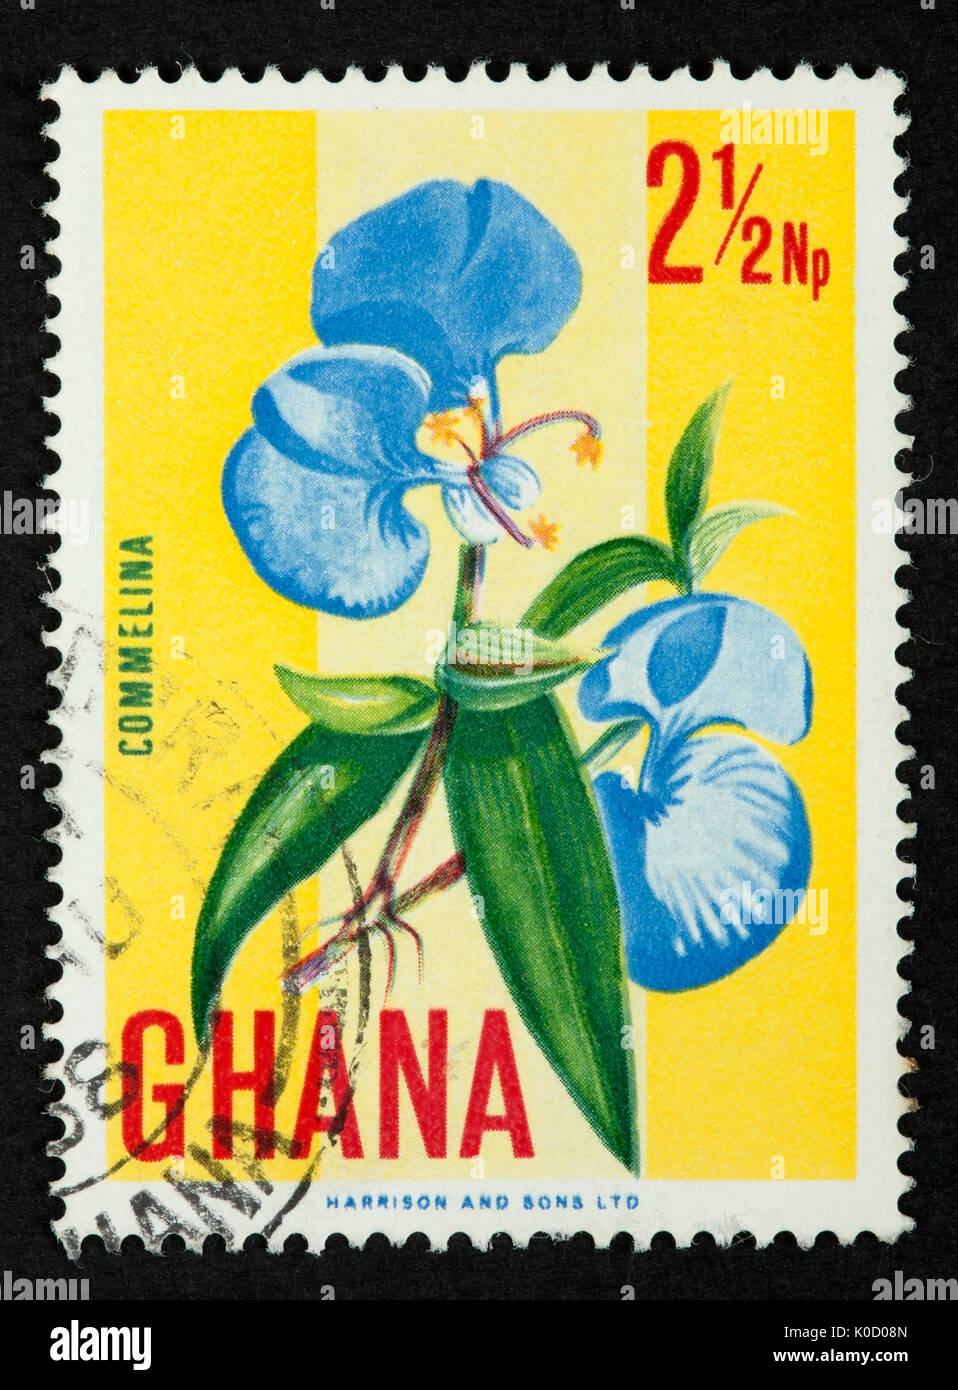 Ghana postage stamp Stock Photo